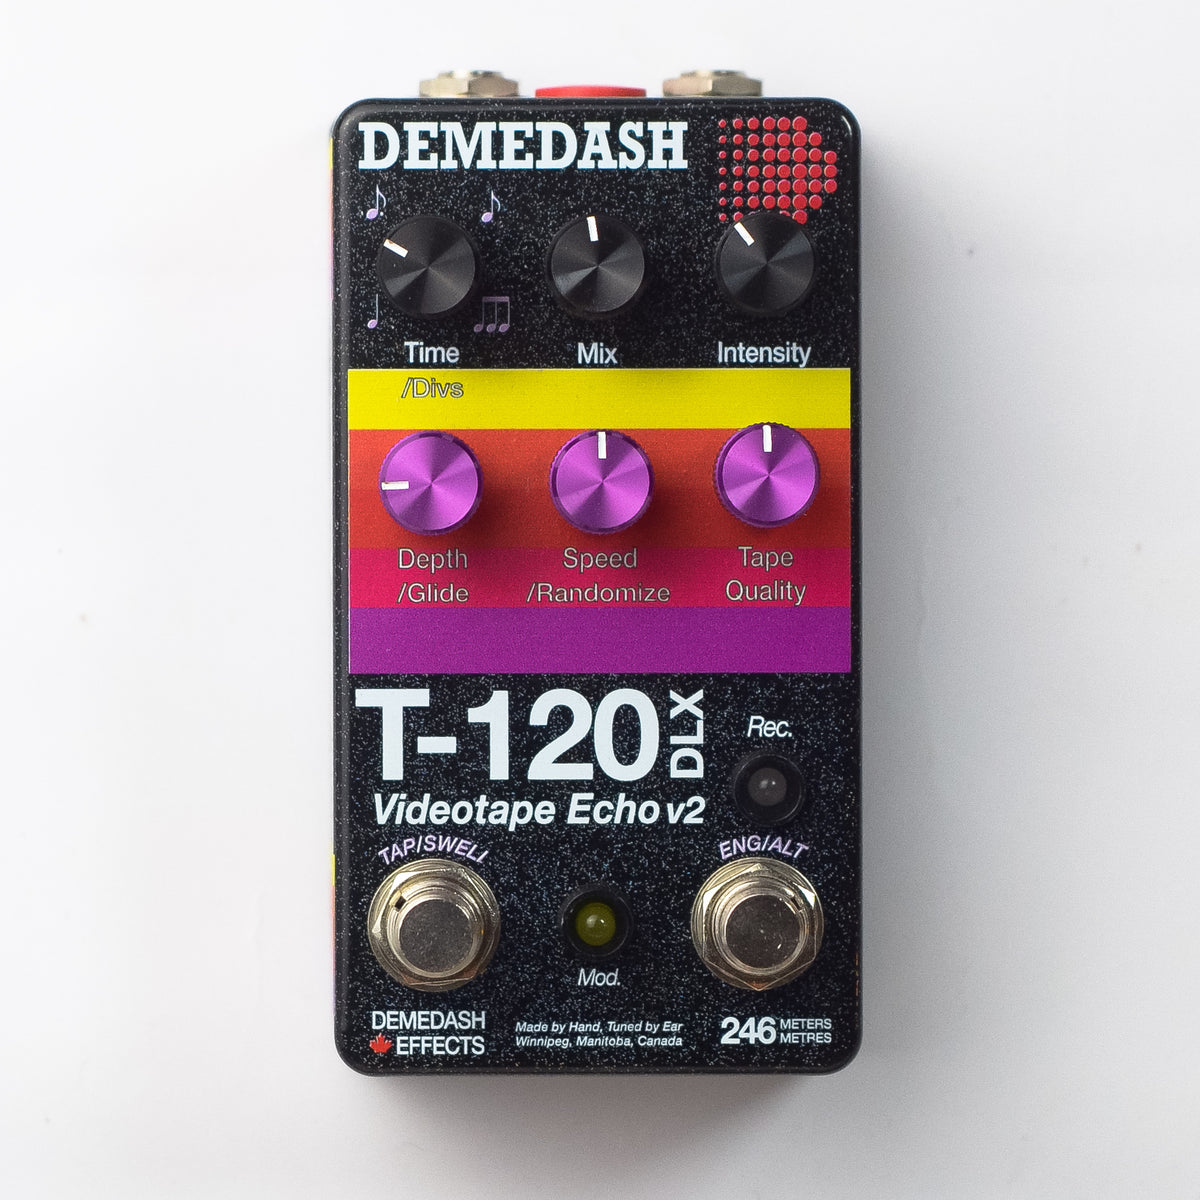 DEMEDASH T-120 DLX ビデオテープ・エコー発送予定日1220 - ギター